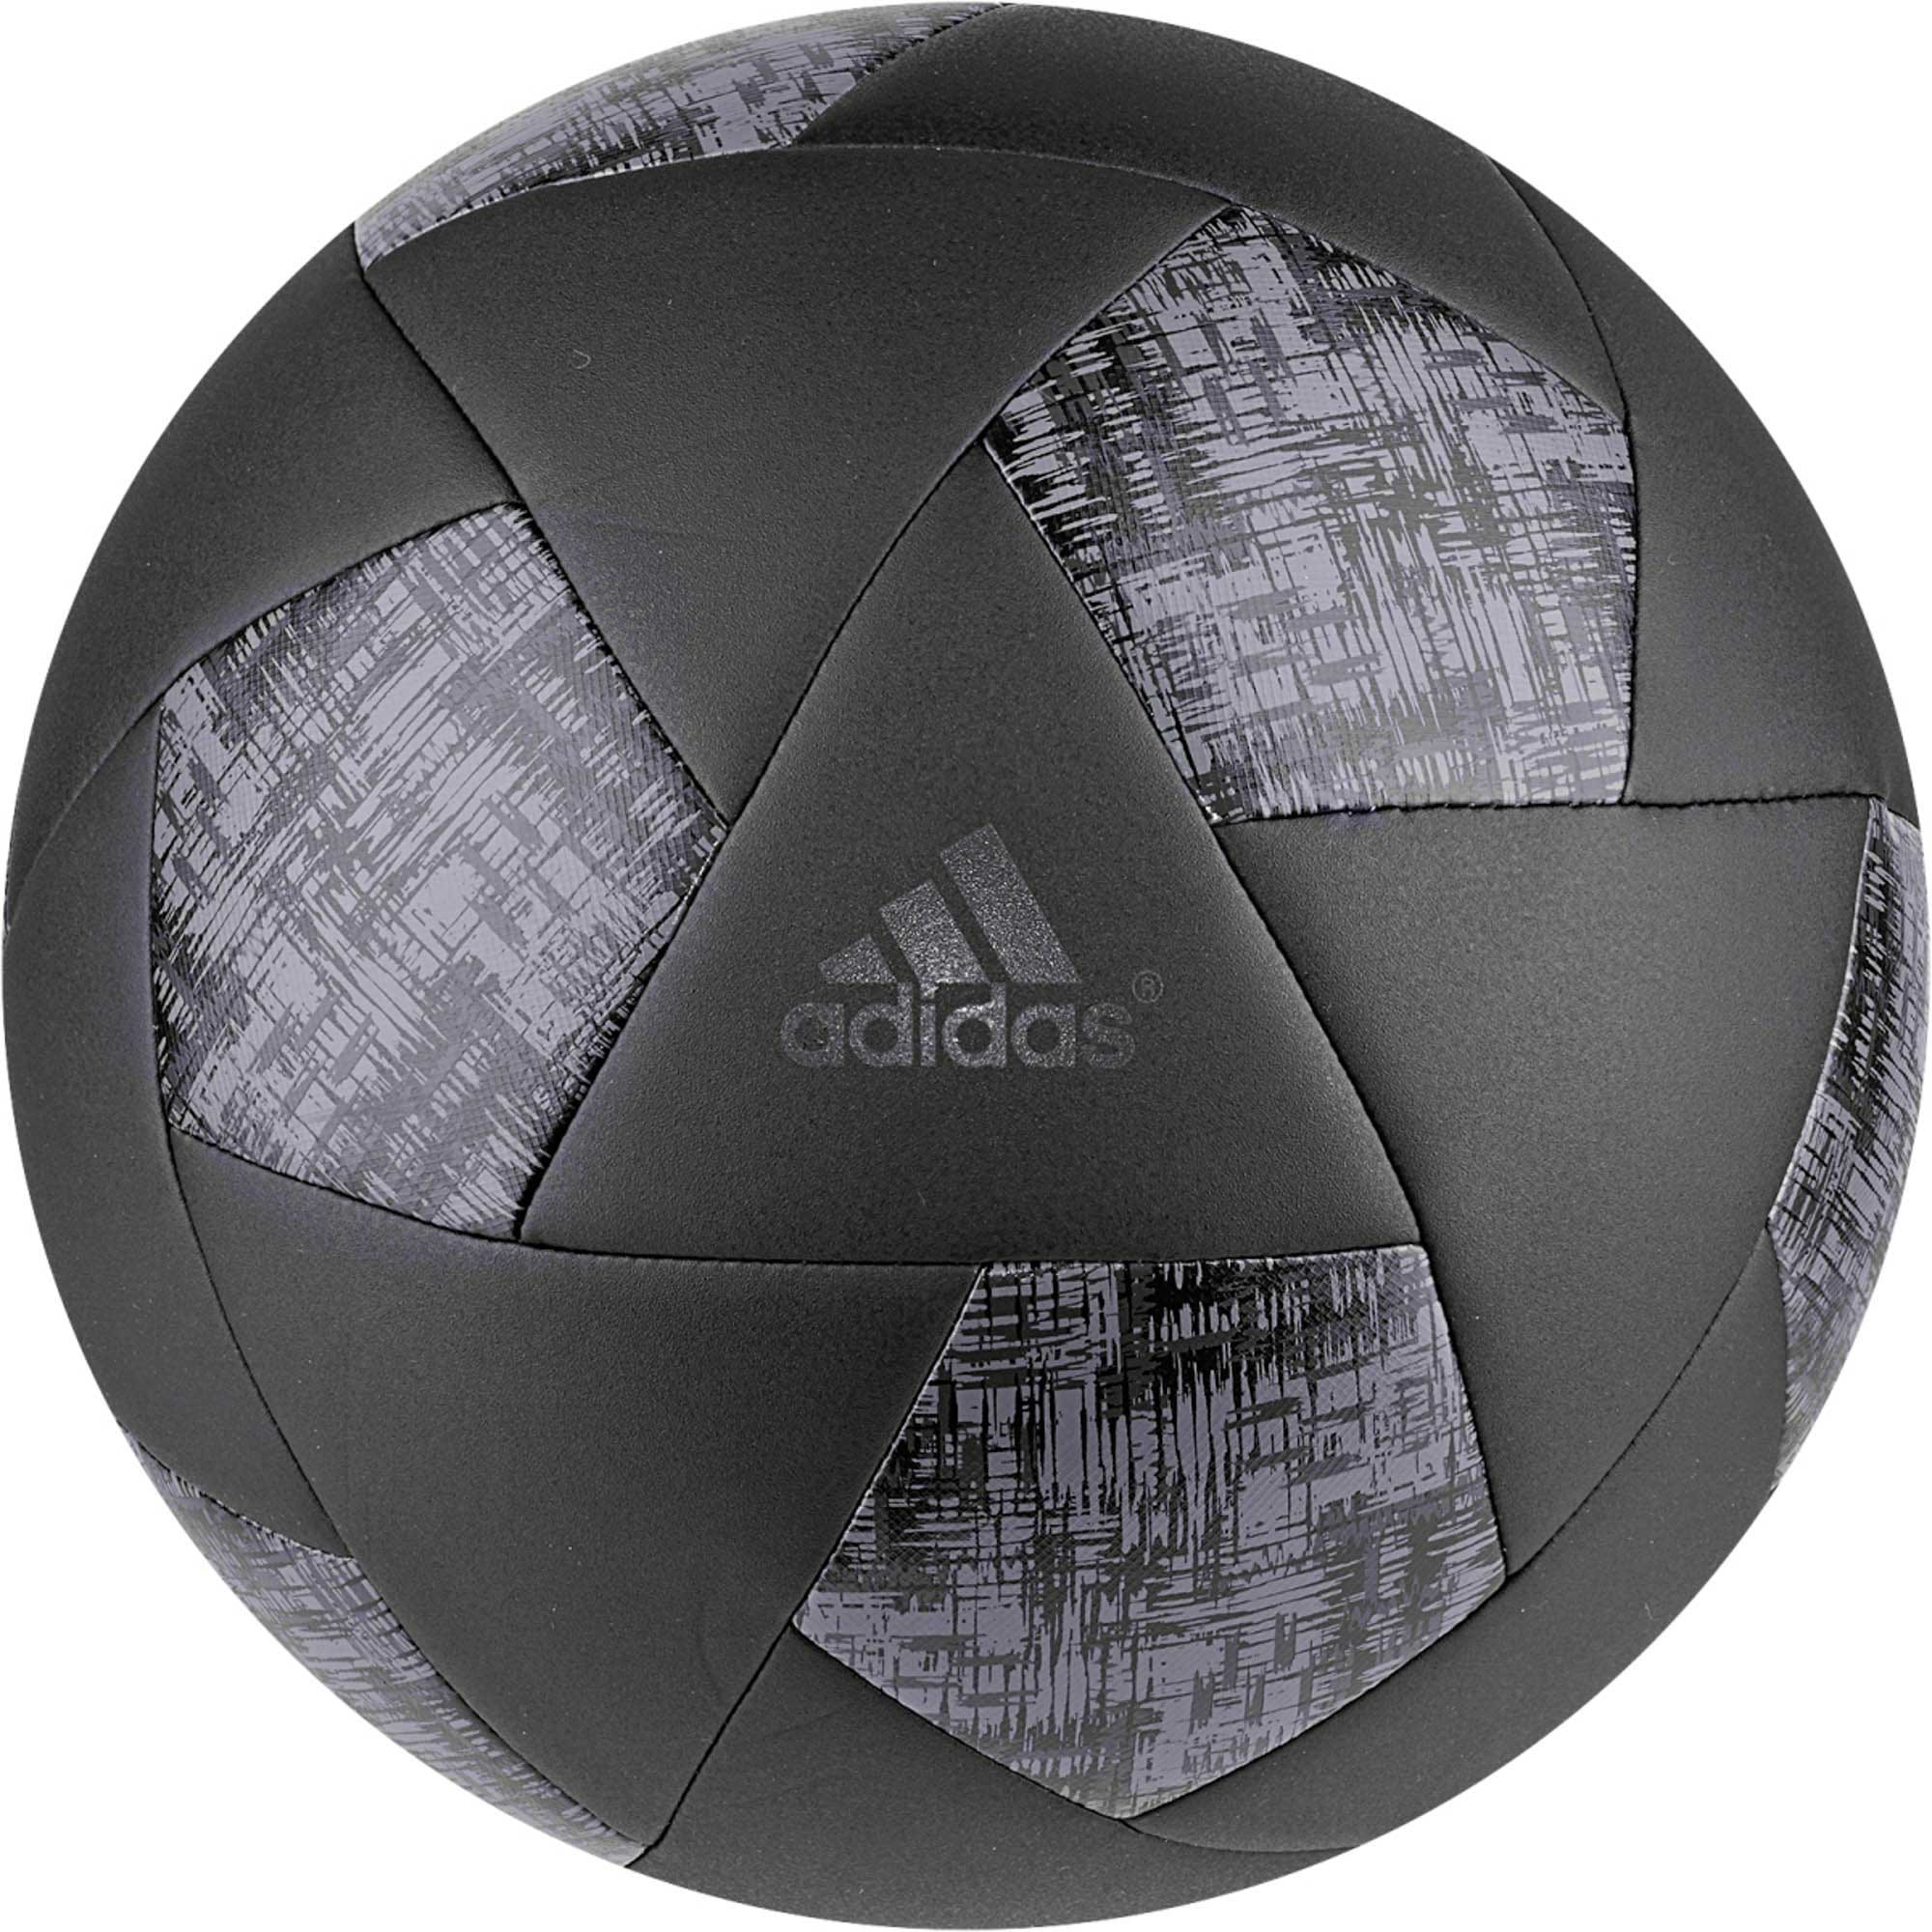 adidas X Glider Soccer Ball - Black 